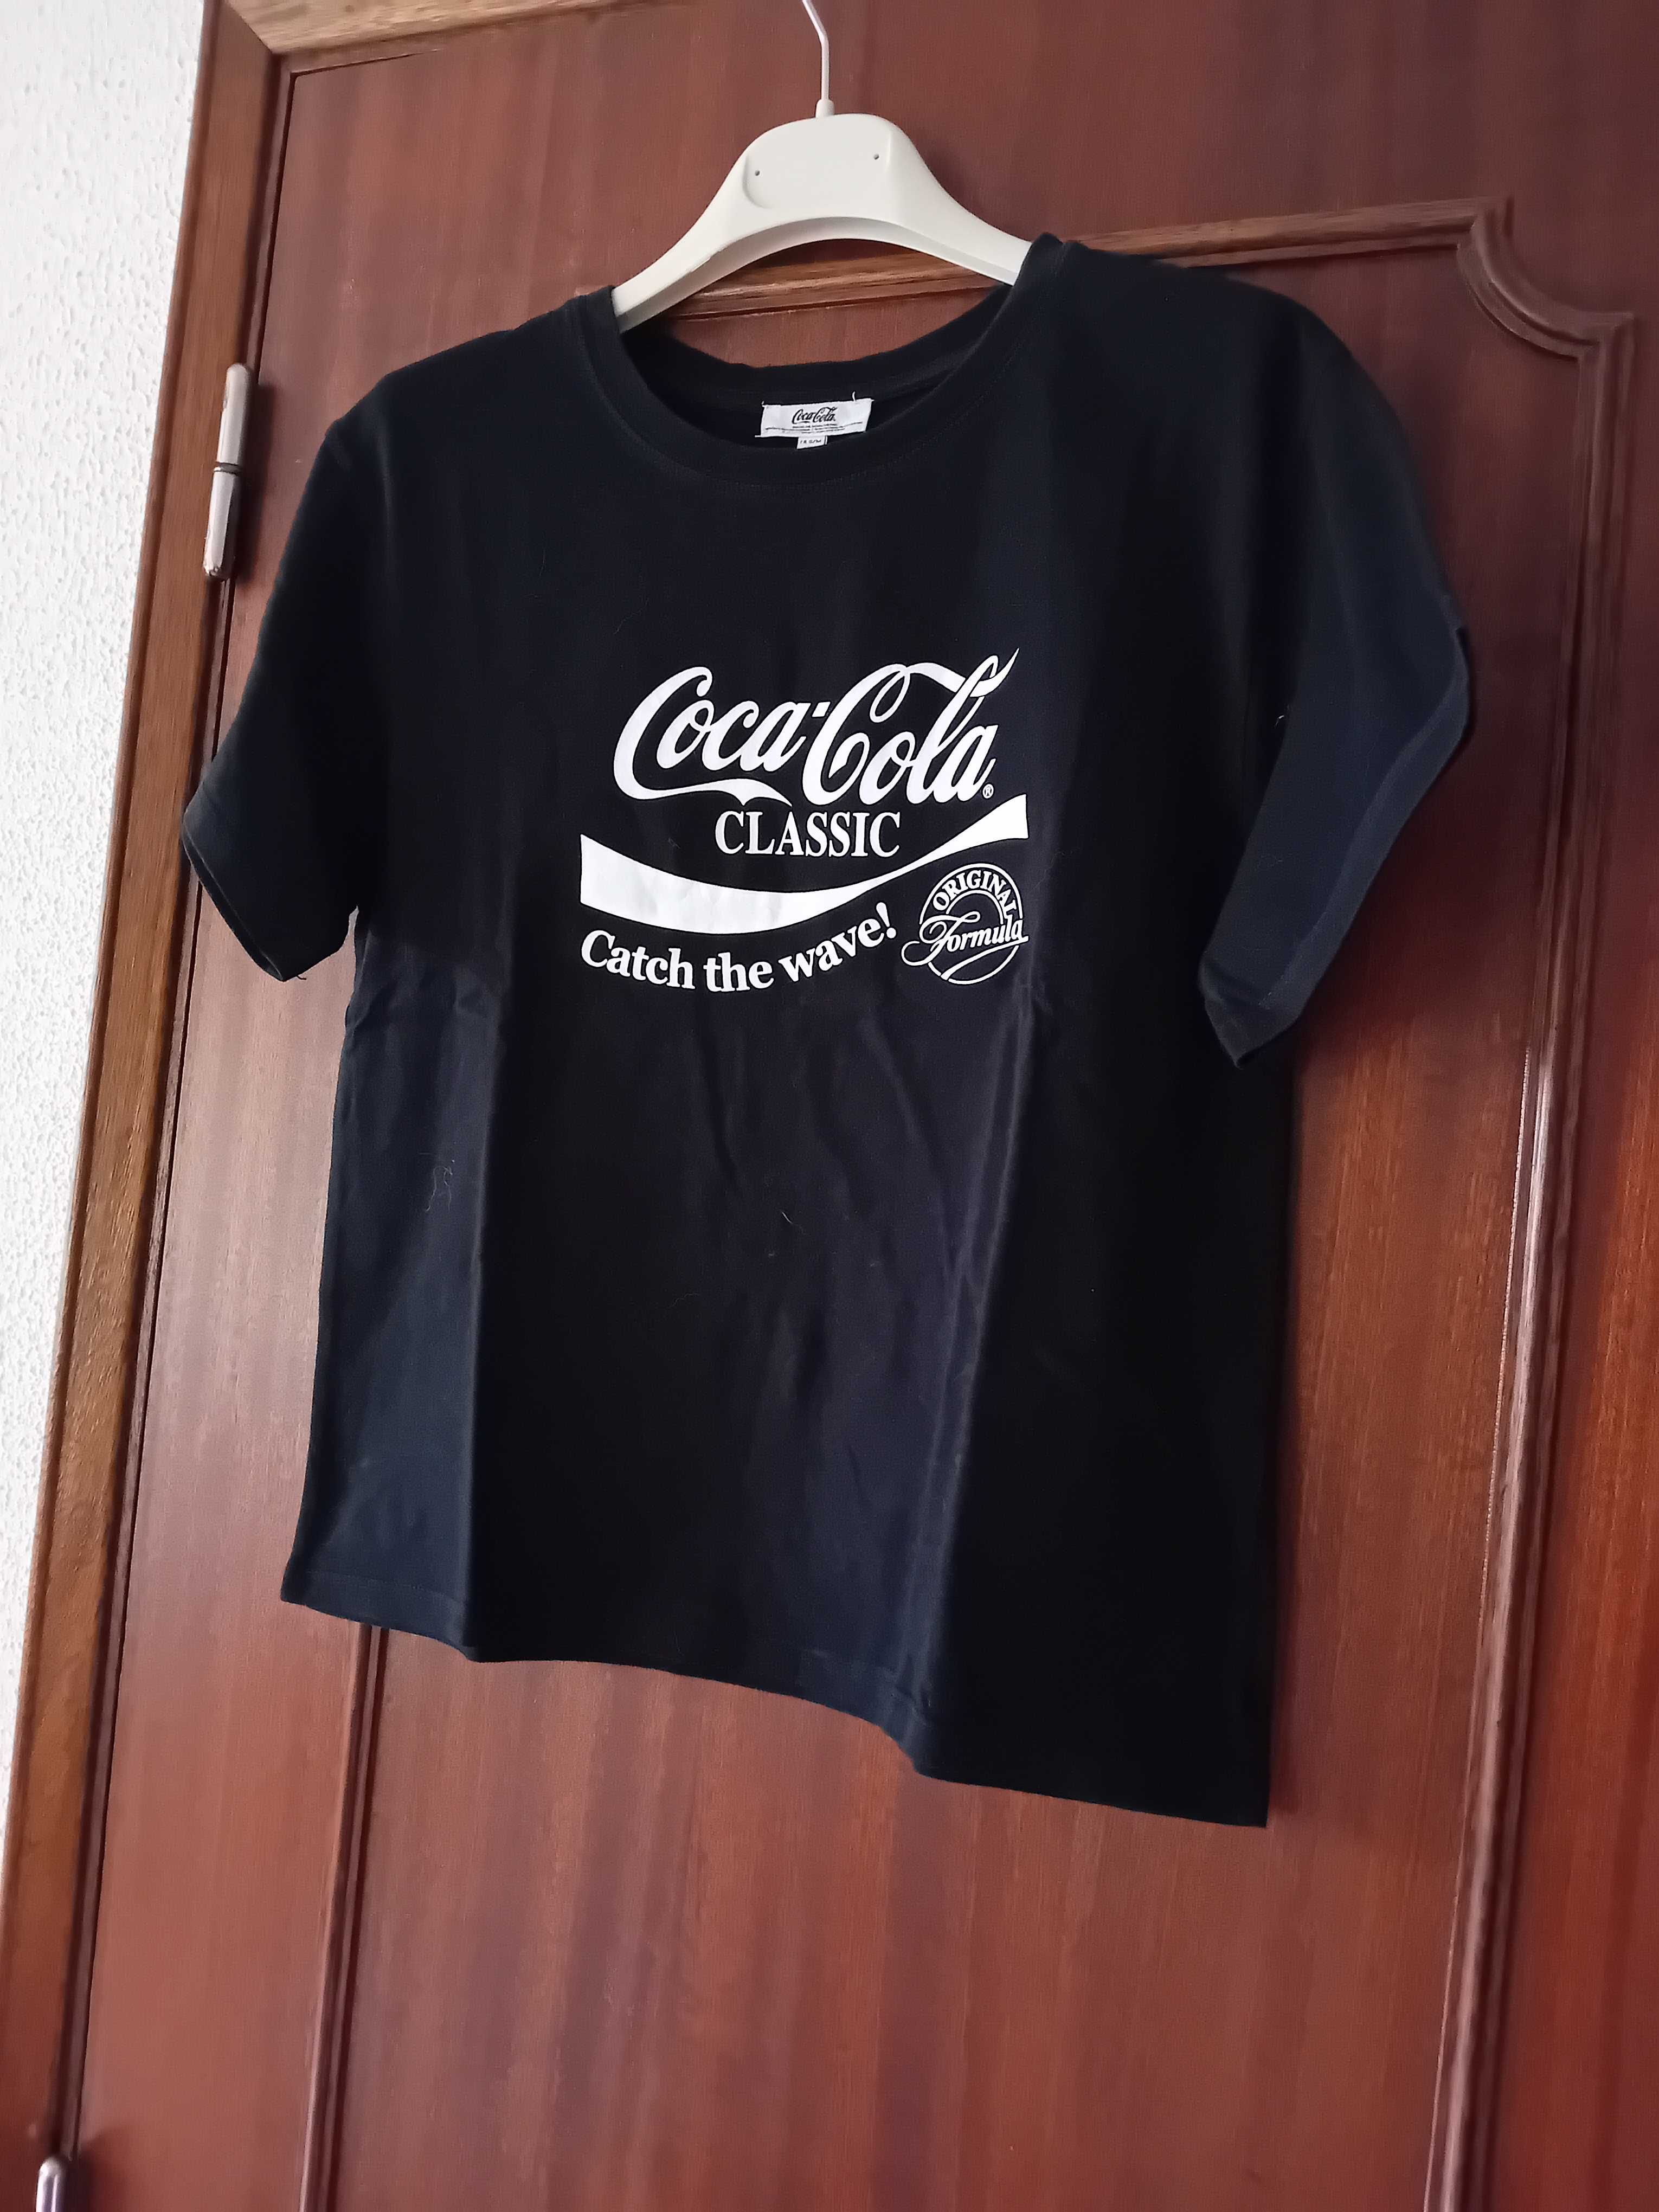 Tshirts - Fila, Coca-cola, Atmosphere, Simpsons...